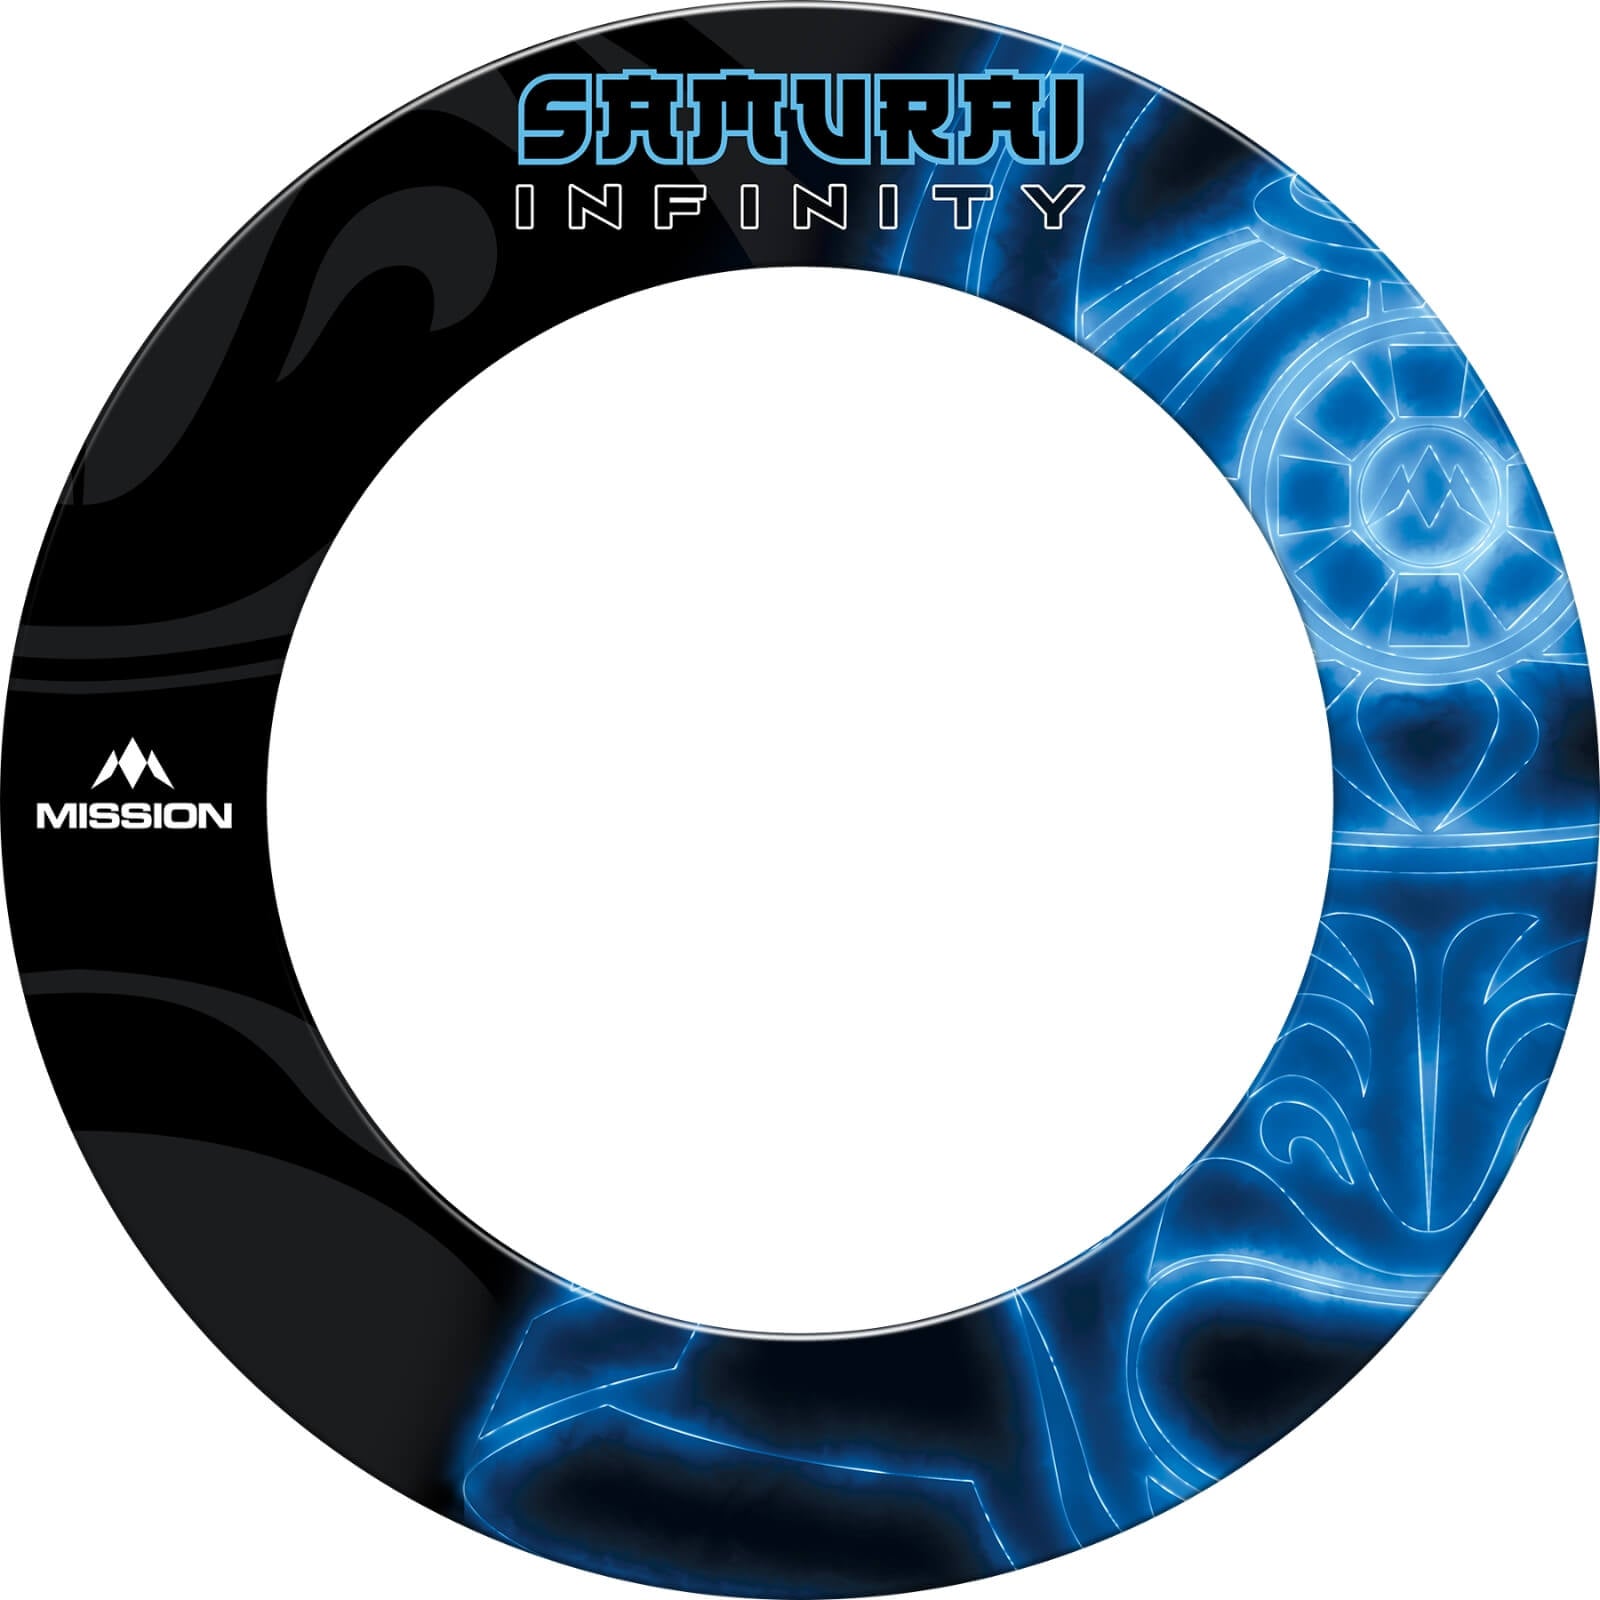 Dartboard Accessories - Mission - Professional Dartboard Surround - Samurai Infinity 